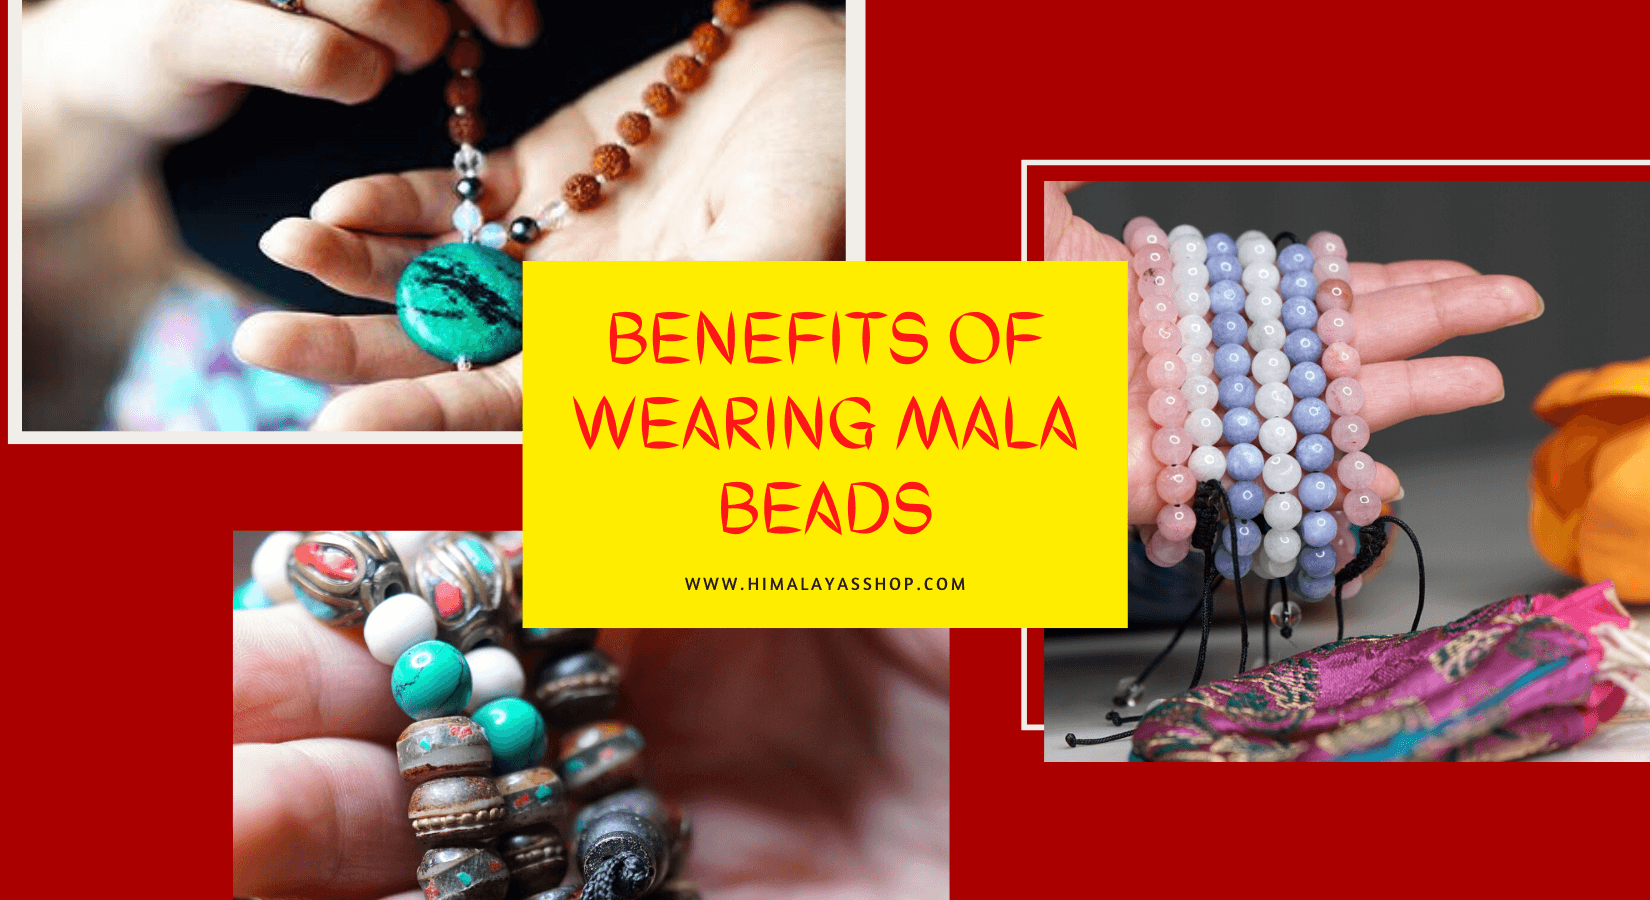 Bodhi Japa Mala Genuine Bodhi Seed From Nepal for Buddhist Prayer &  Spiritual Awakening Natural Stone Wrist Mala -  Australia